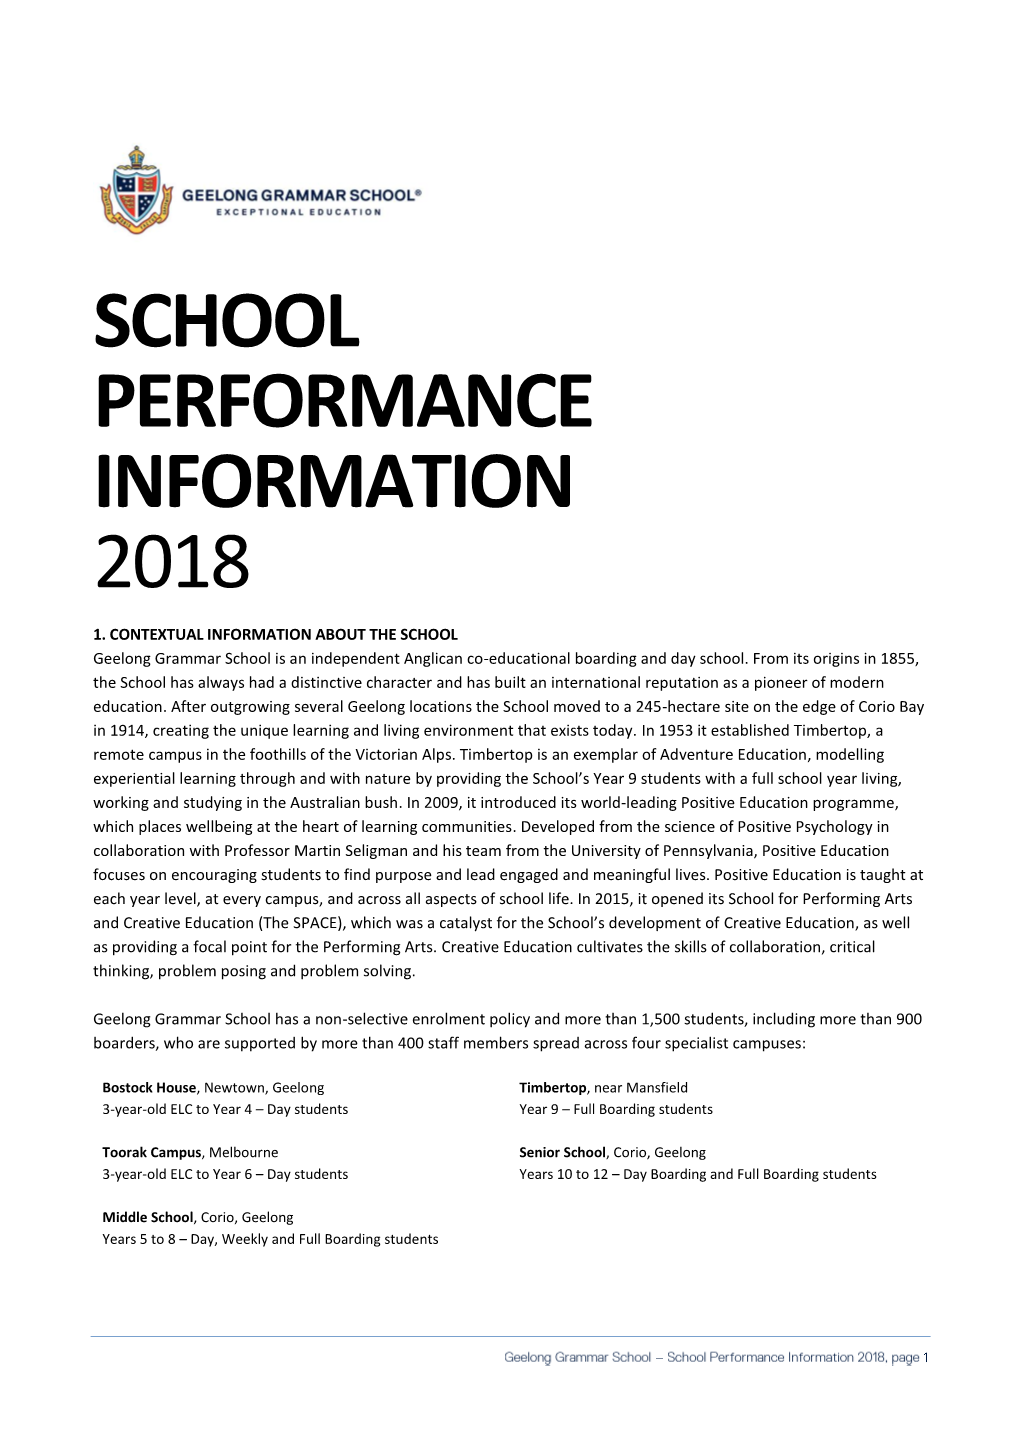 School Performance Information 2018